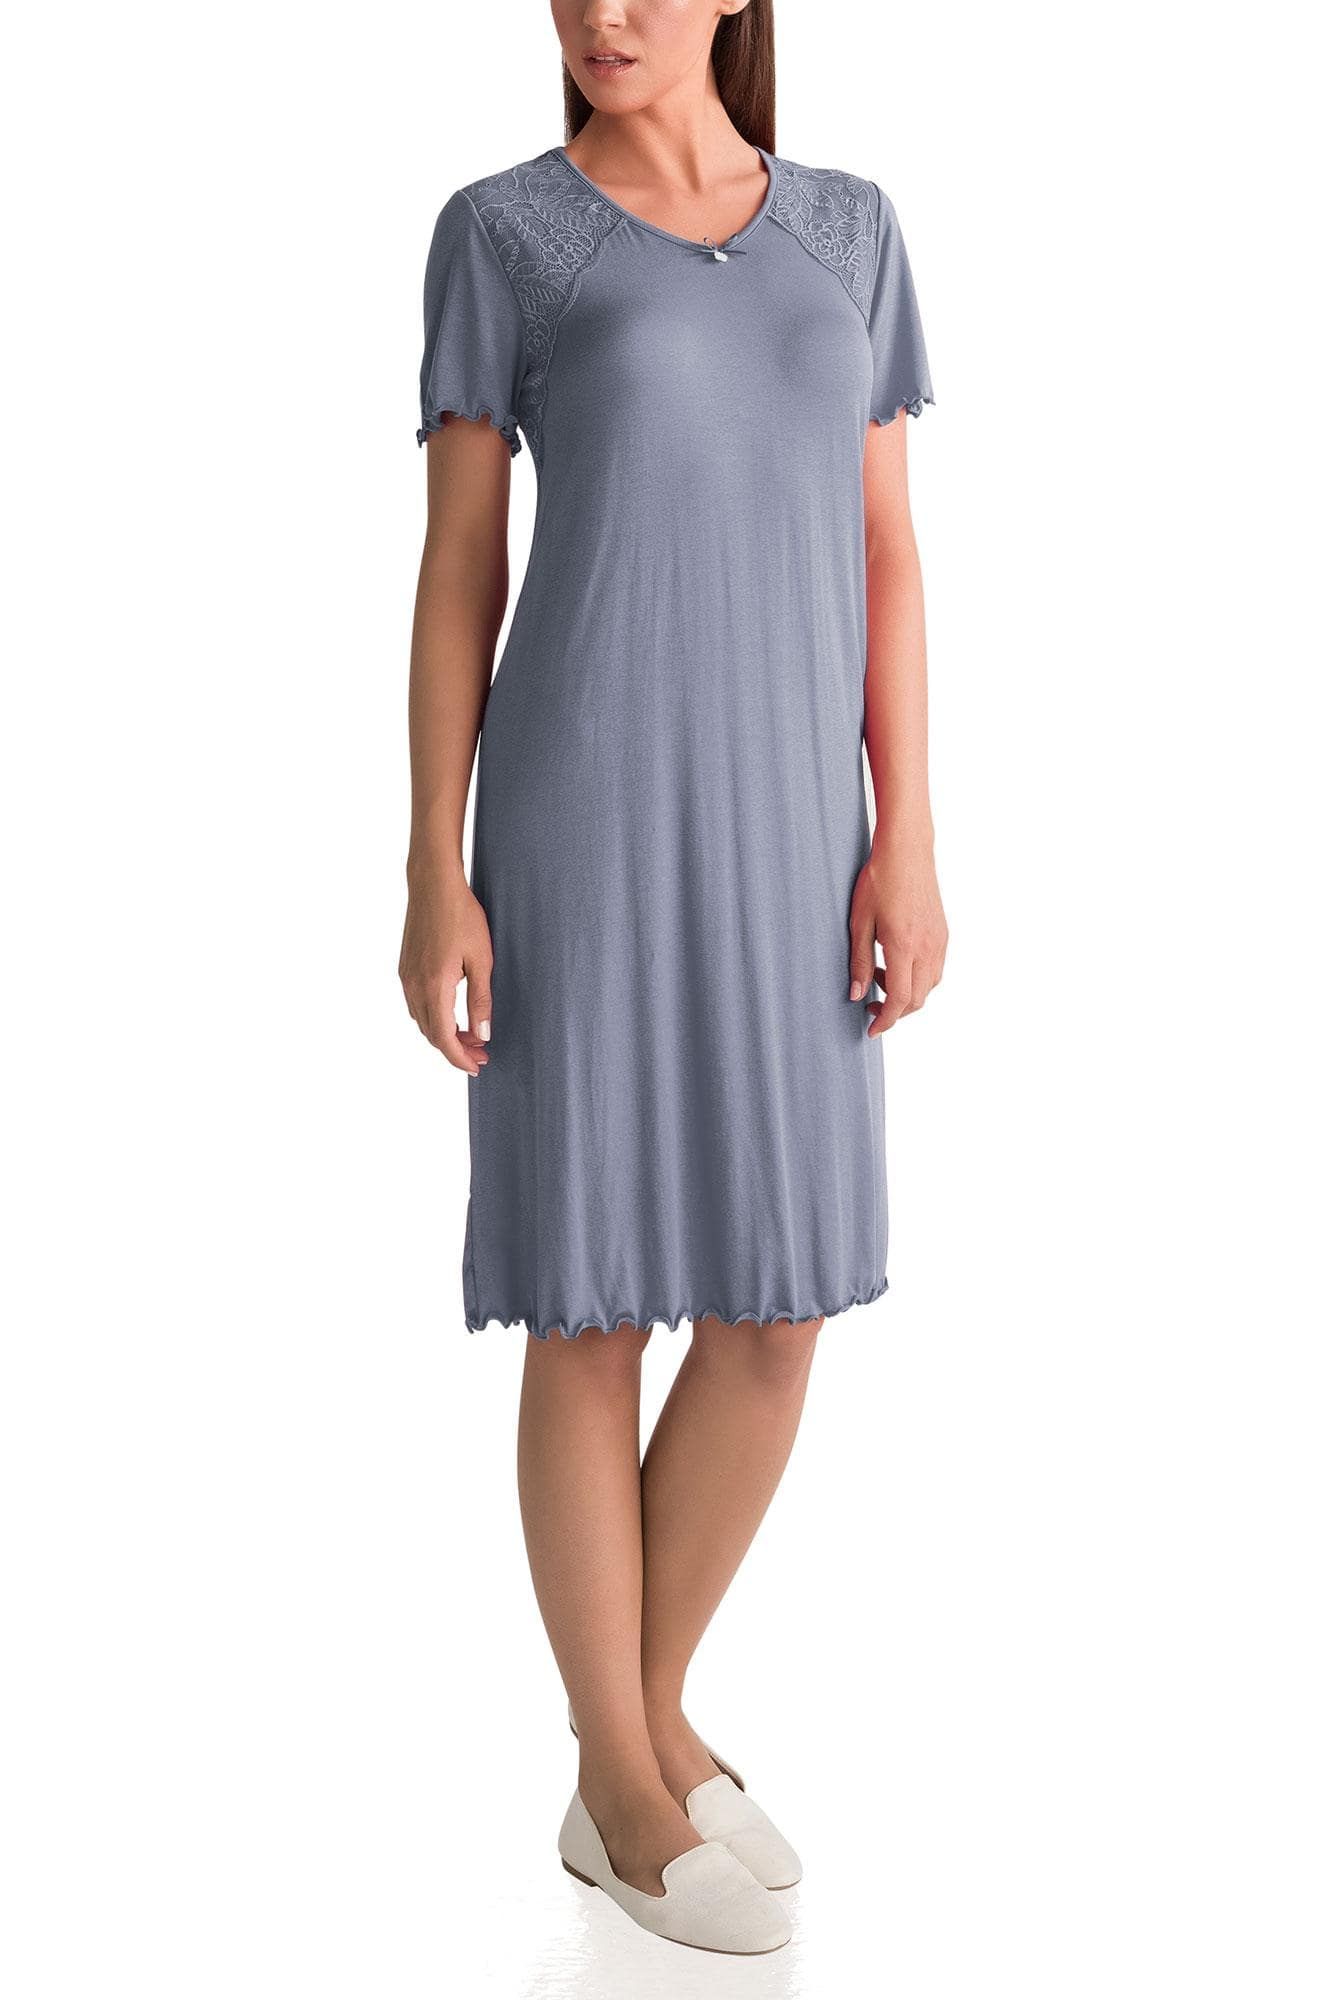 Women’s Nightgown Plus Size